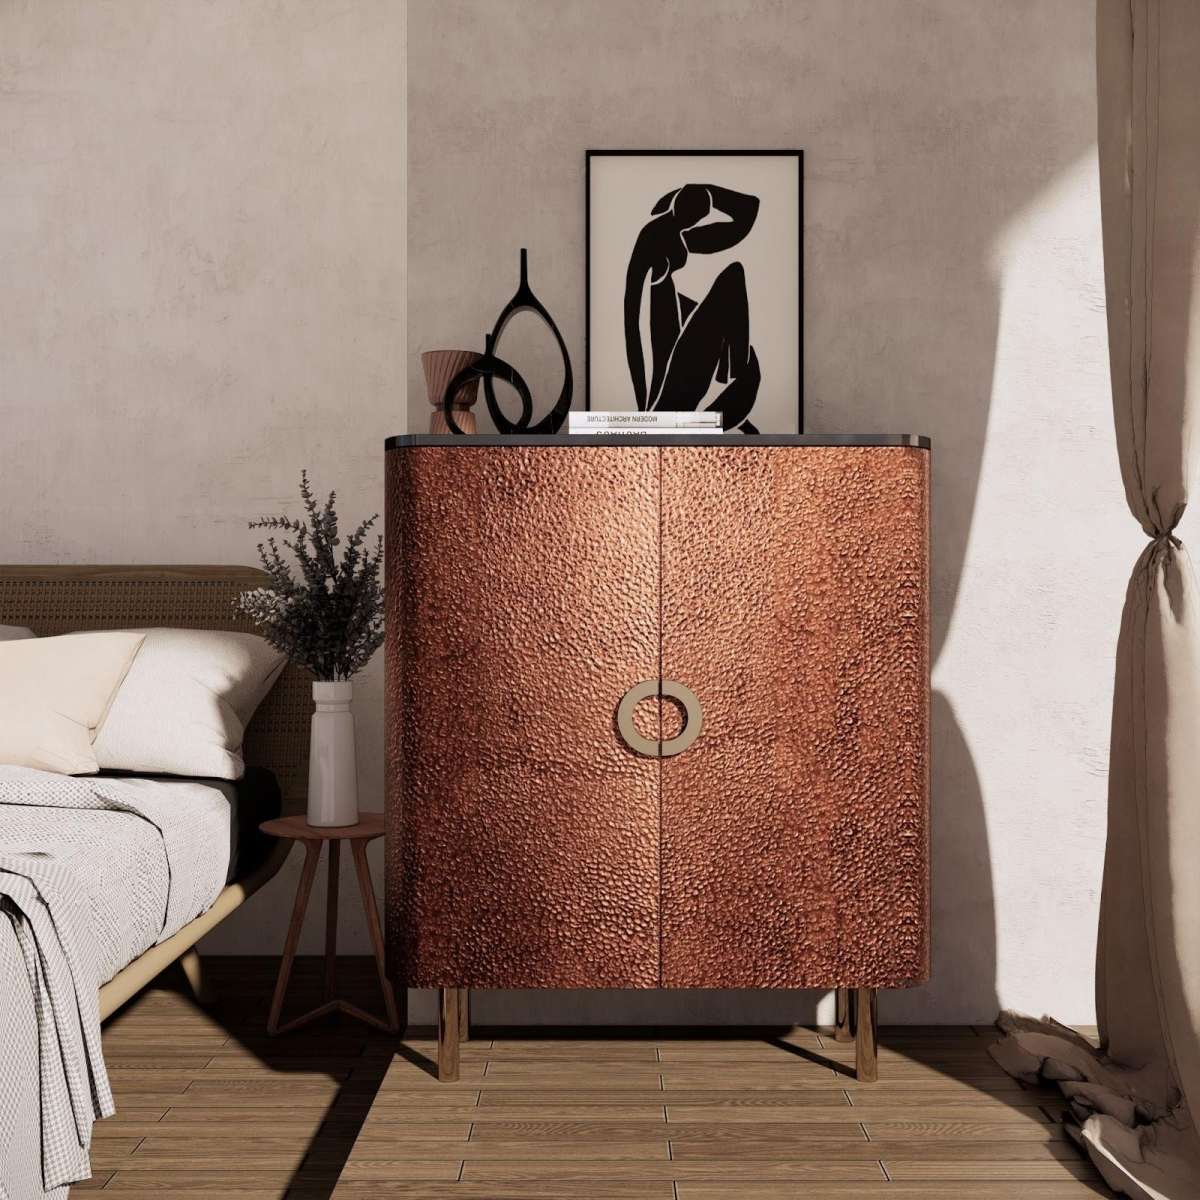 4 ways to style your interior spaces with copper – Design Dekko